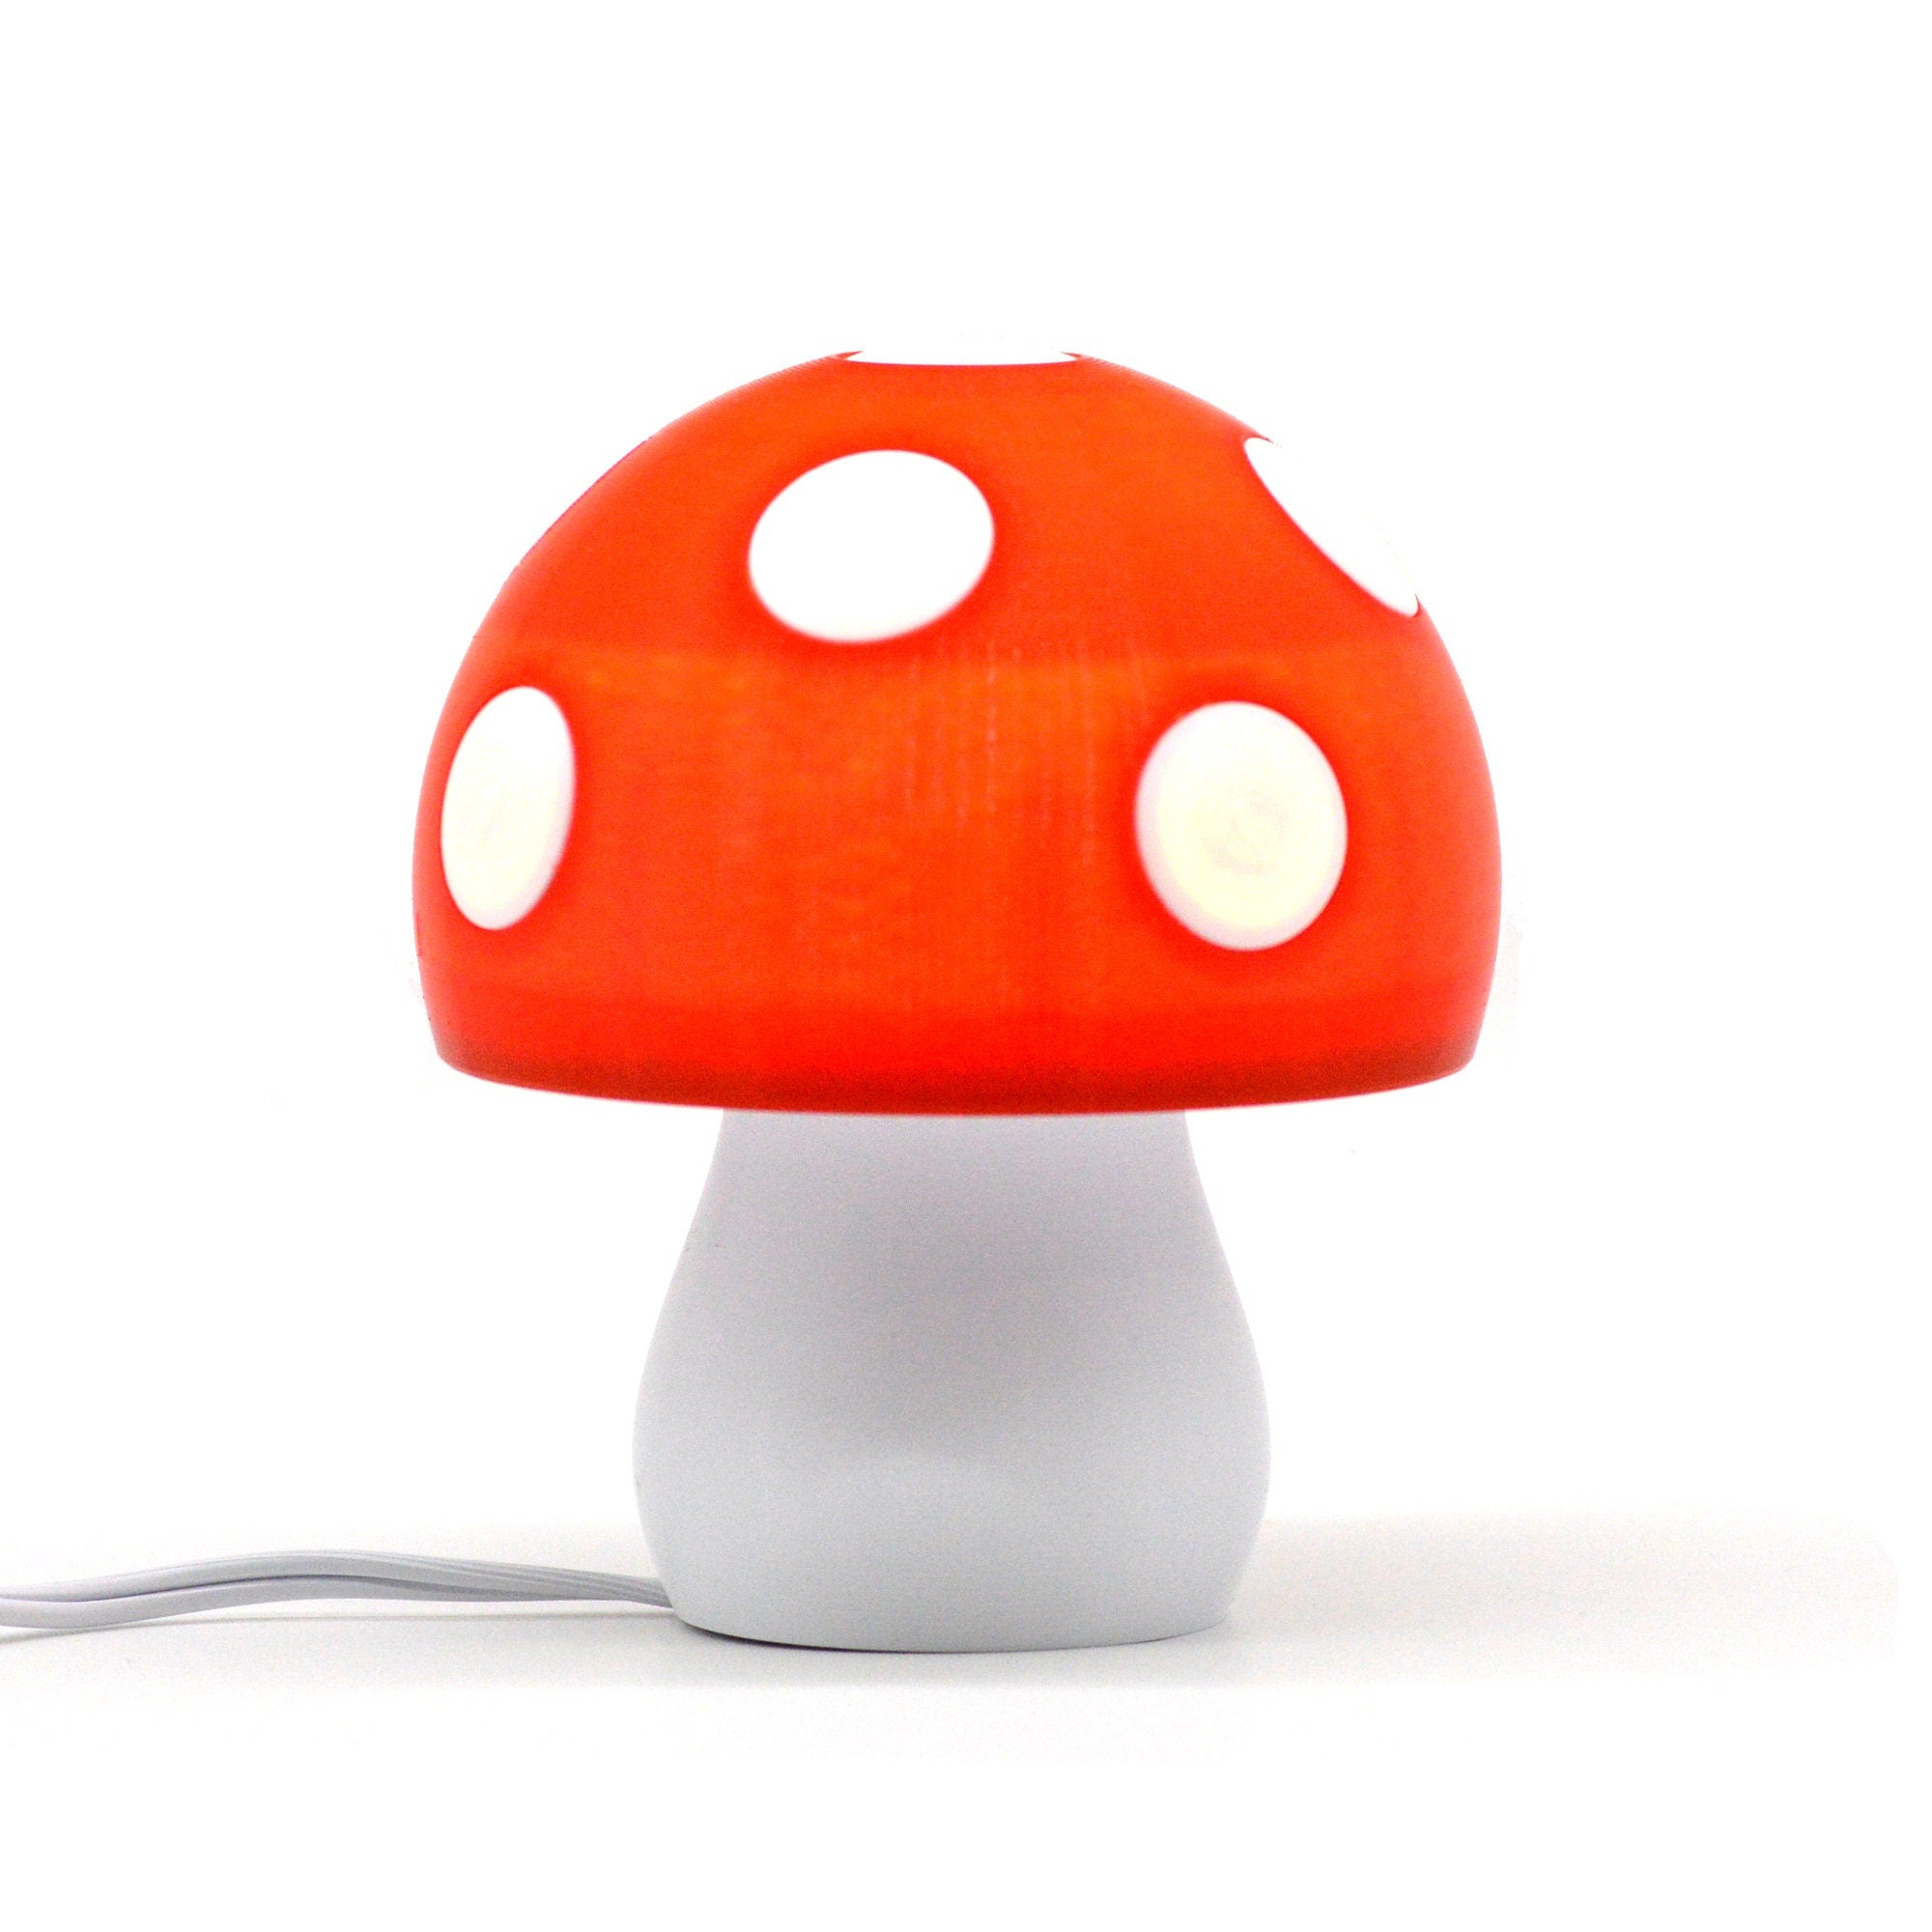 Mushroom Lamp - 3D Printed Mushroom themed Trippy Light for Bedroom or Offic